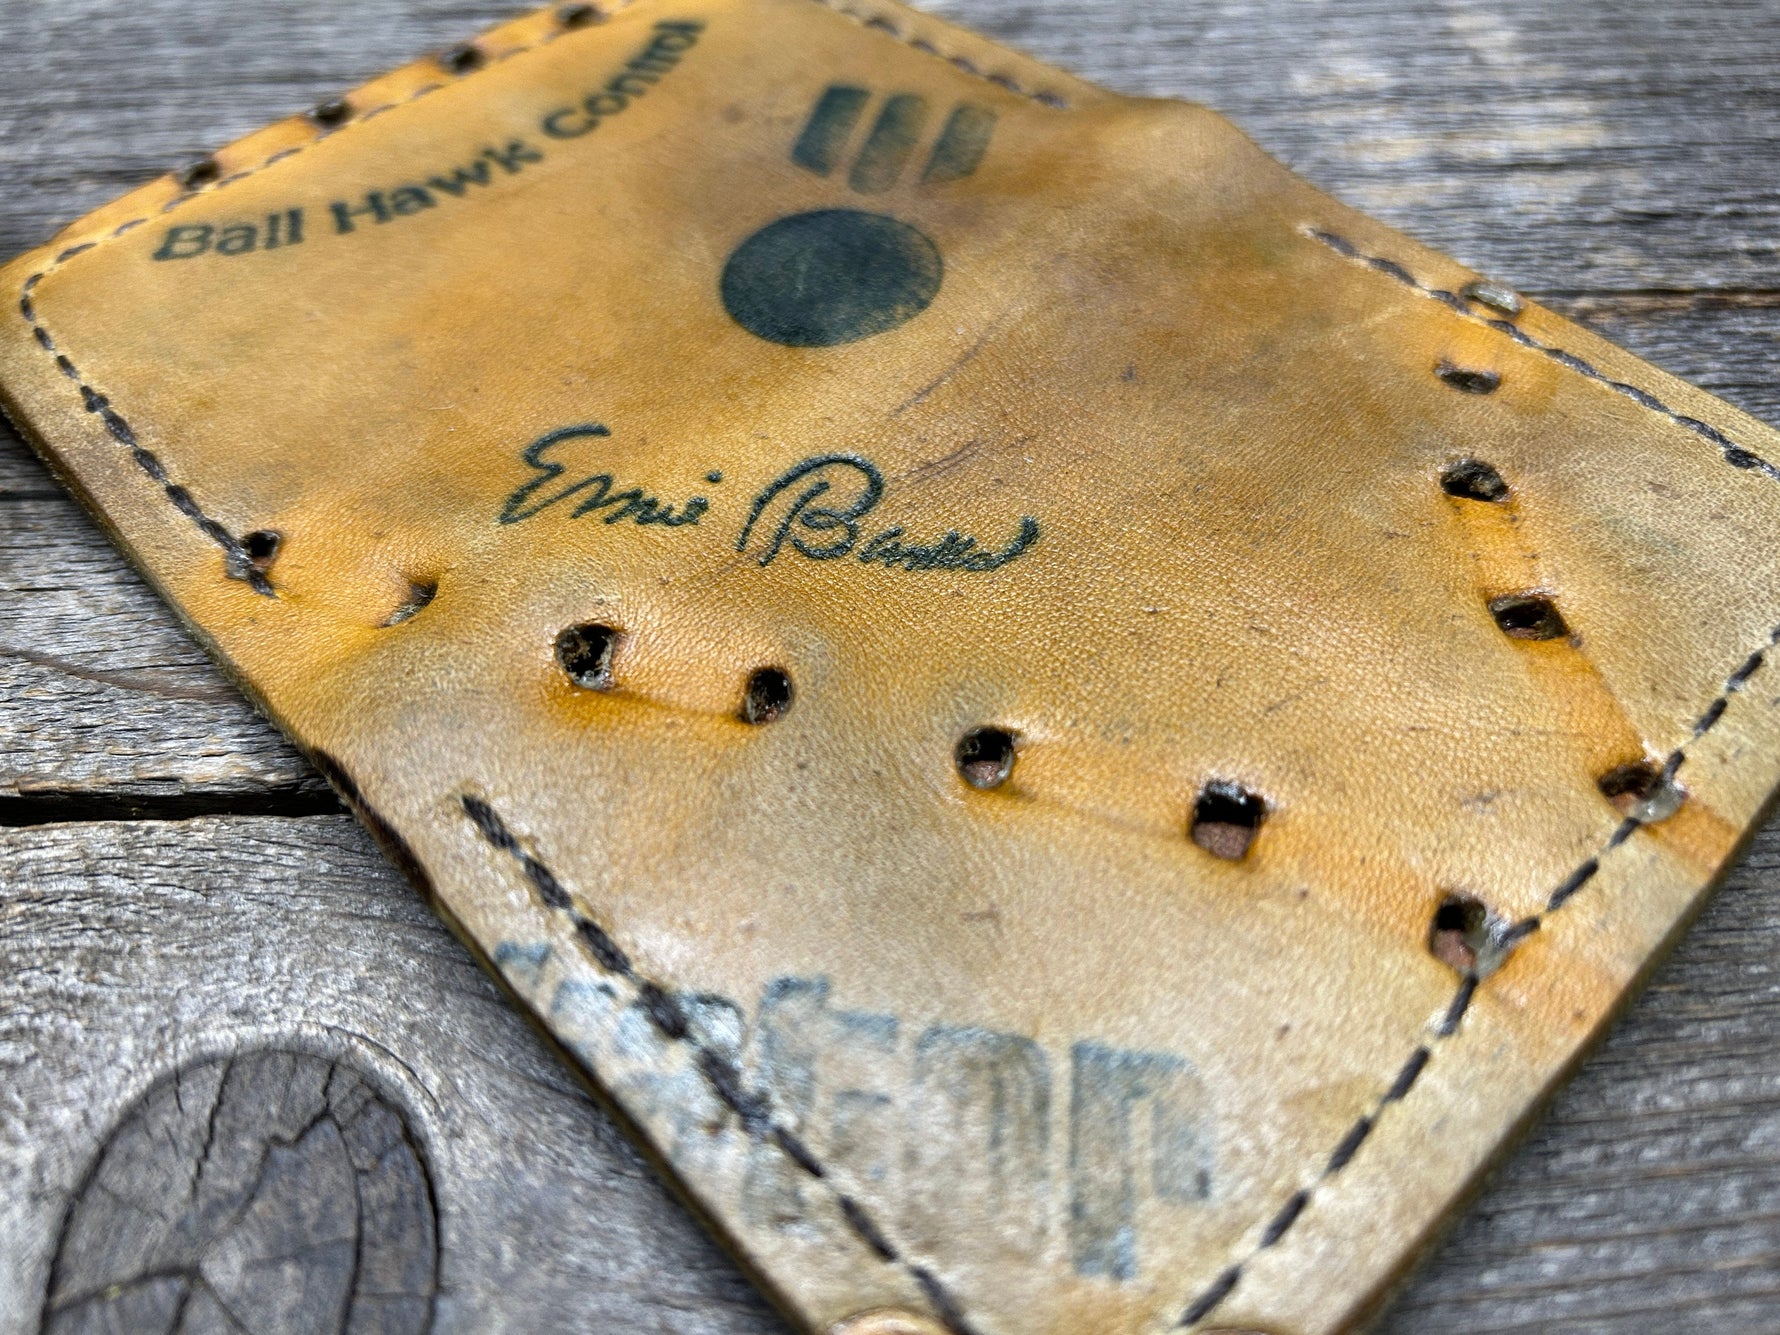 Vintage Medalist Ernie Banks "Mr. Cub" Baseball Glove Wallet!